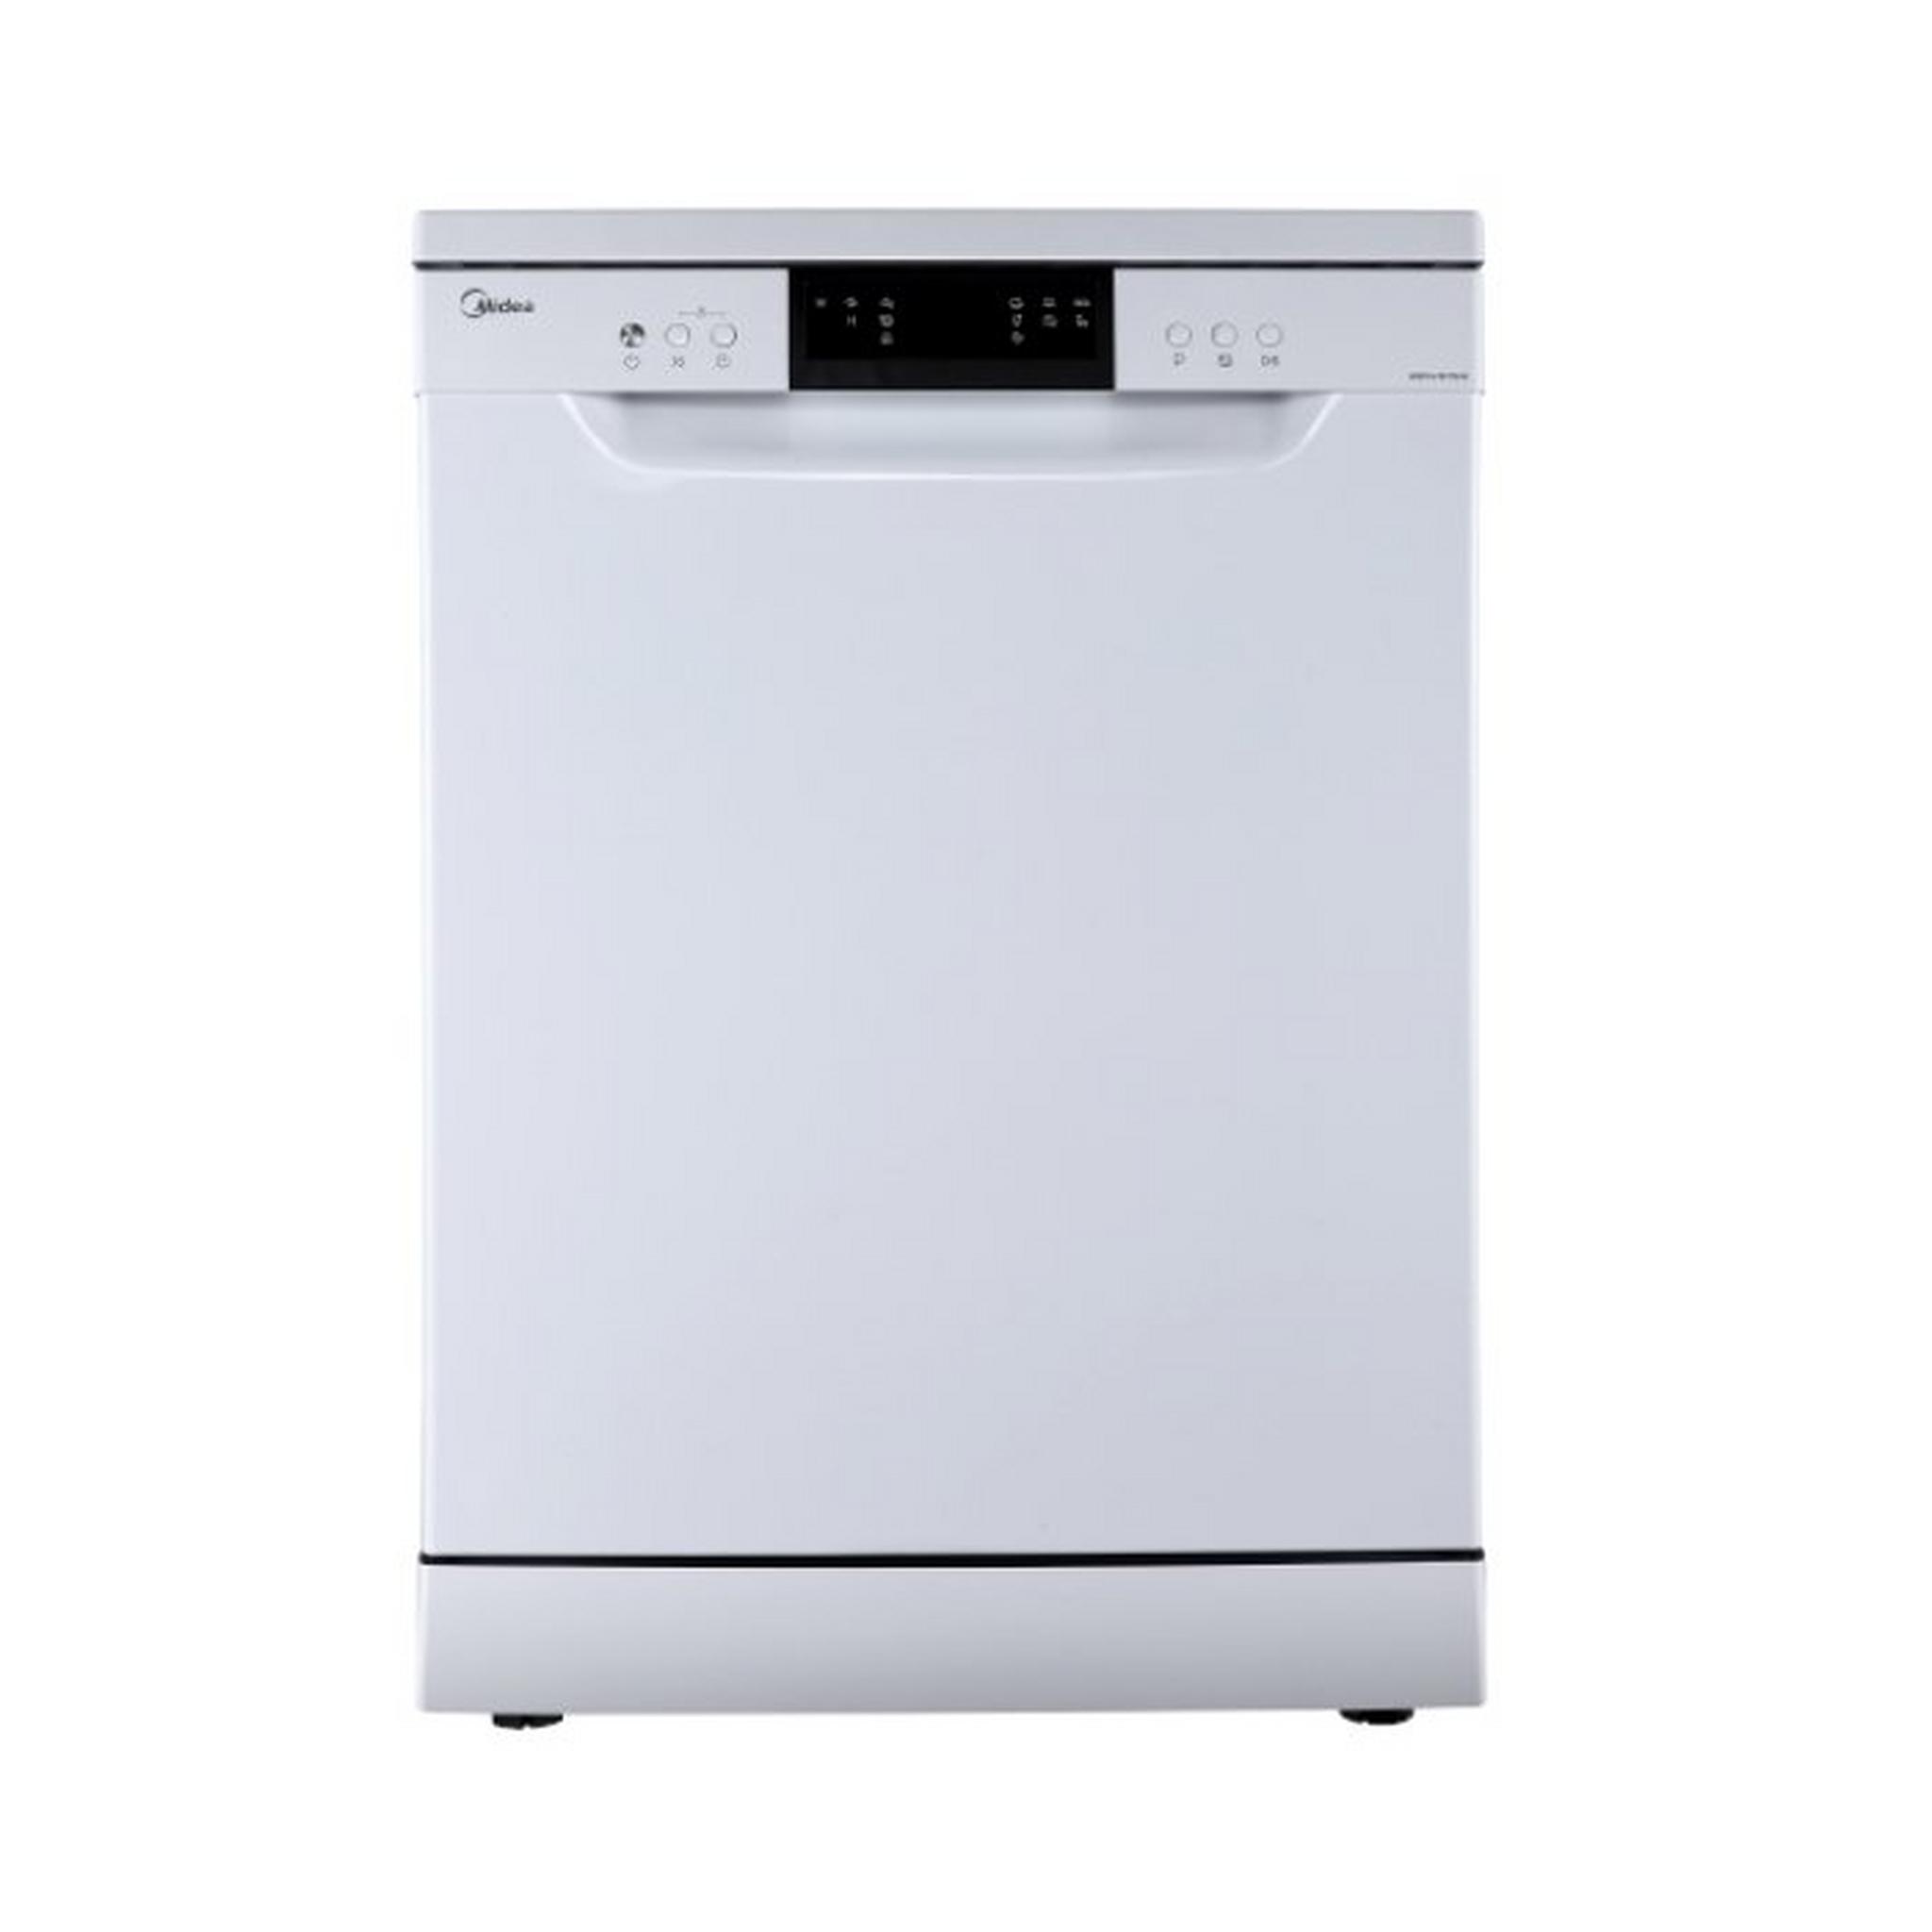 Midea 7 Programs 14 Settings Freestanding Dishwasher (WQP147617QW) - White